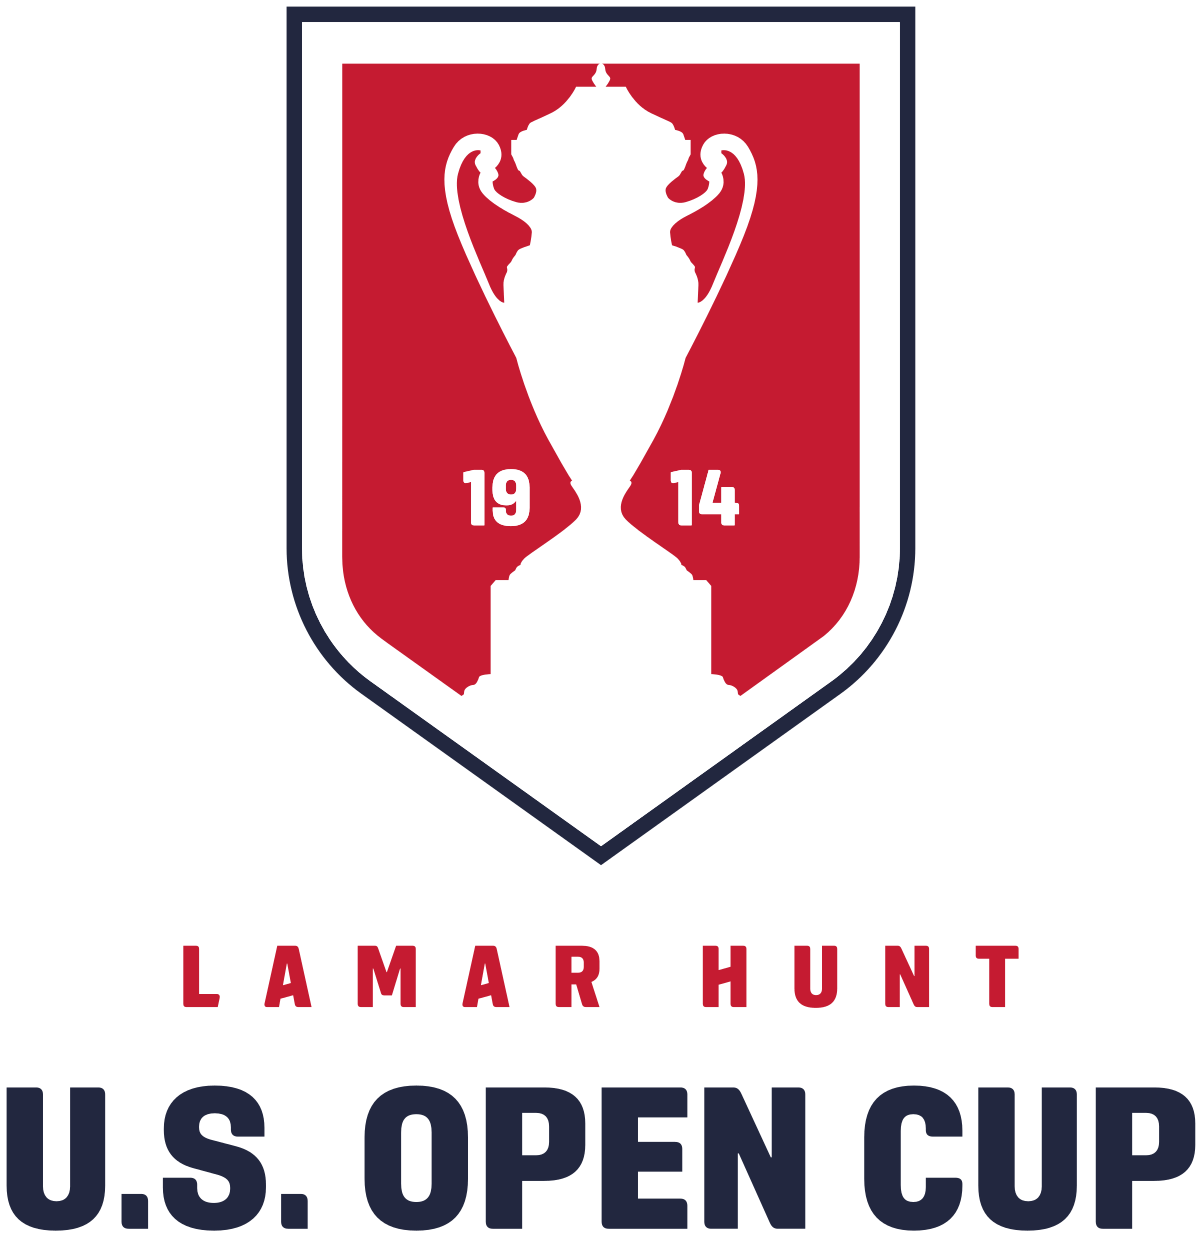 Red U San Francisco Based Start Up Logo - U.S. Open Cup